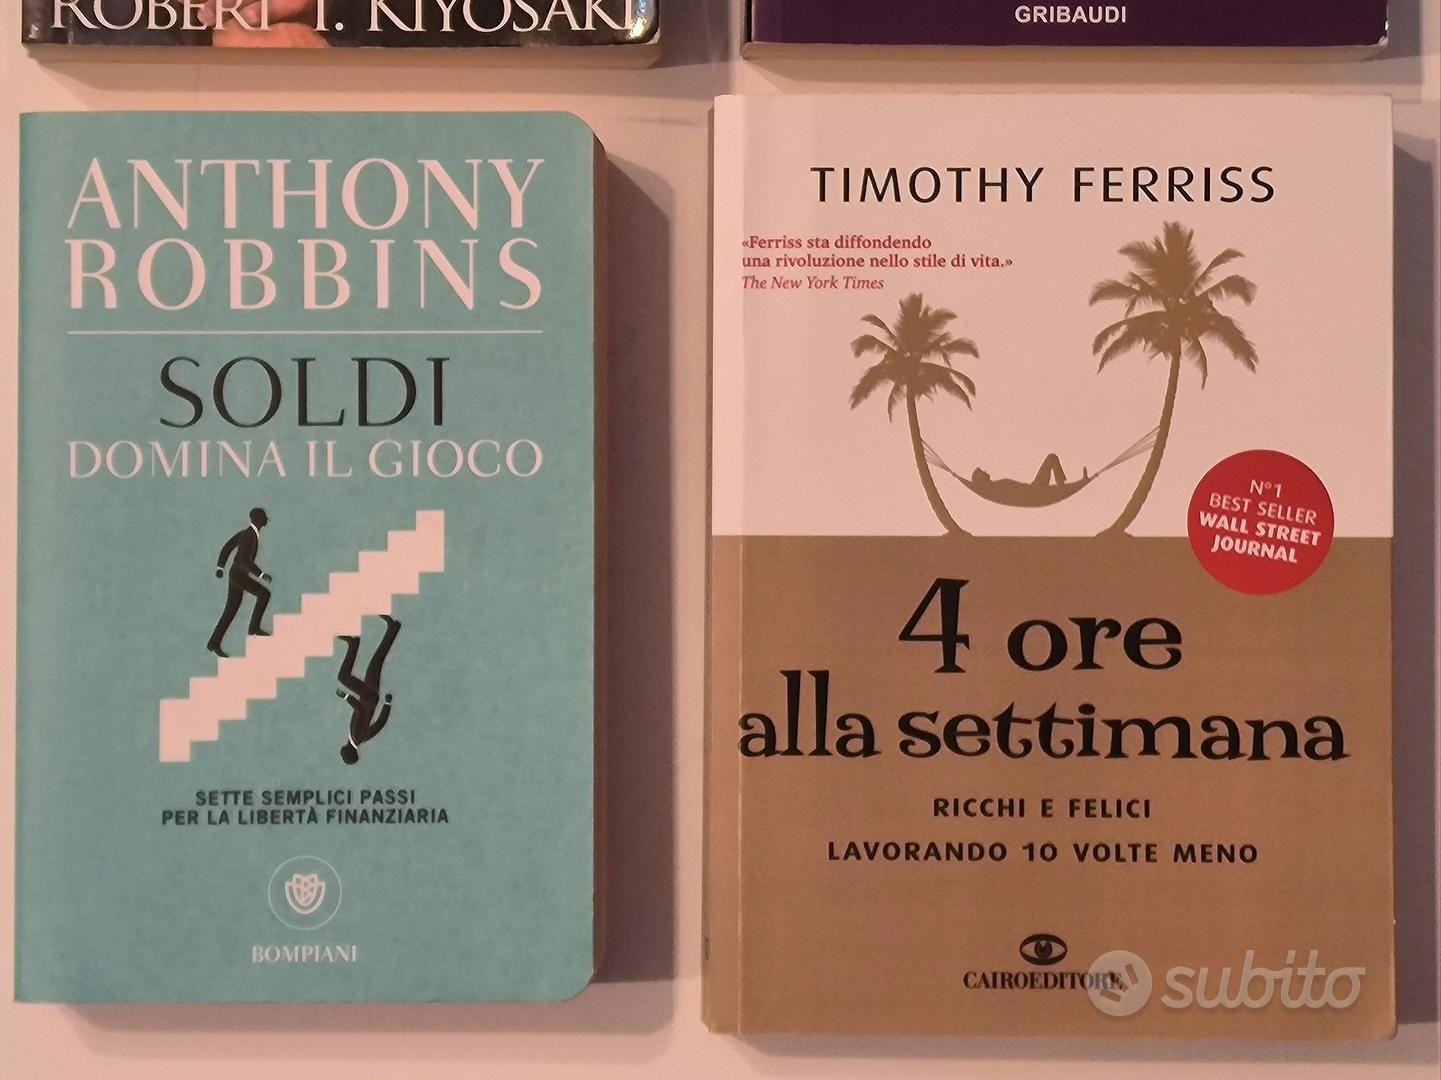 Robert Kiyosaki - anthony robbins - timothy ferris - Libri e Riviste In  vendita a Catanzaro